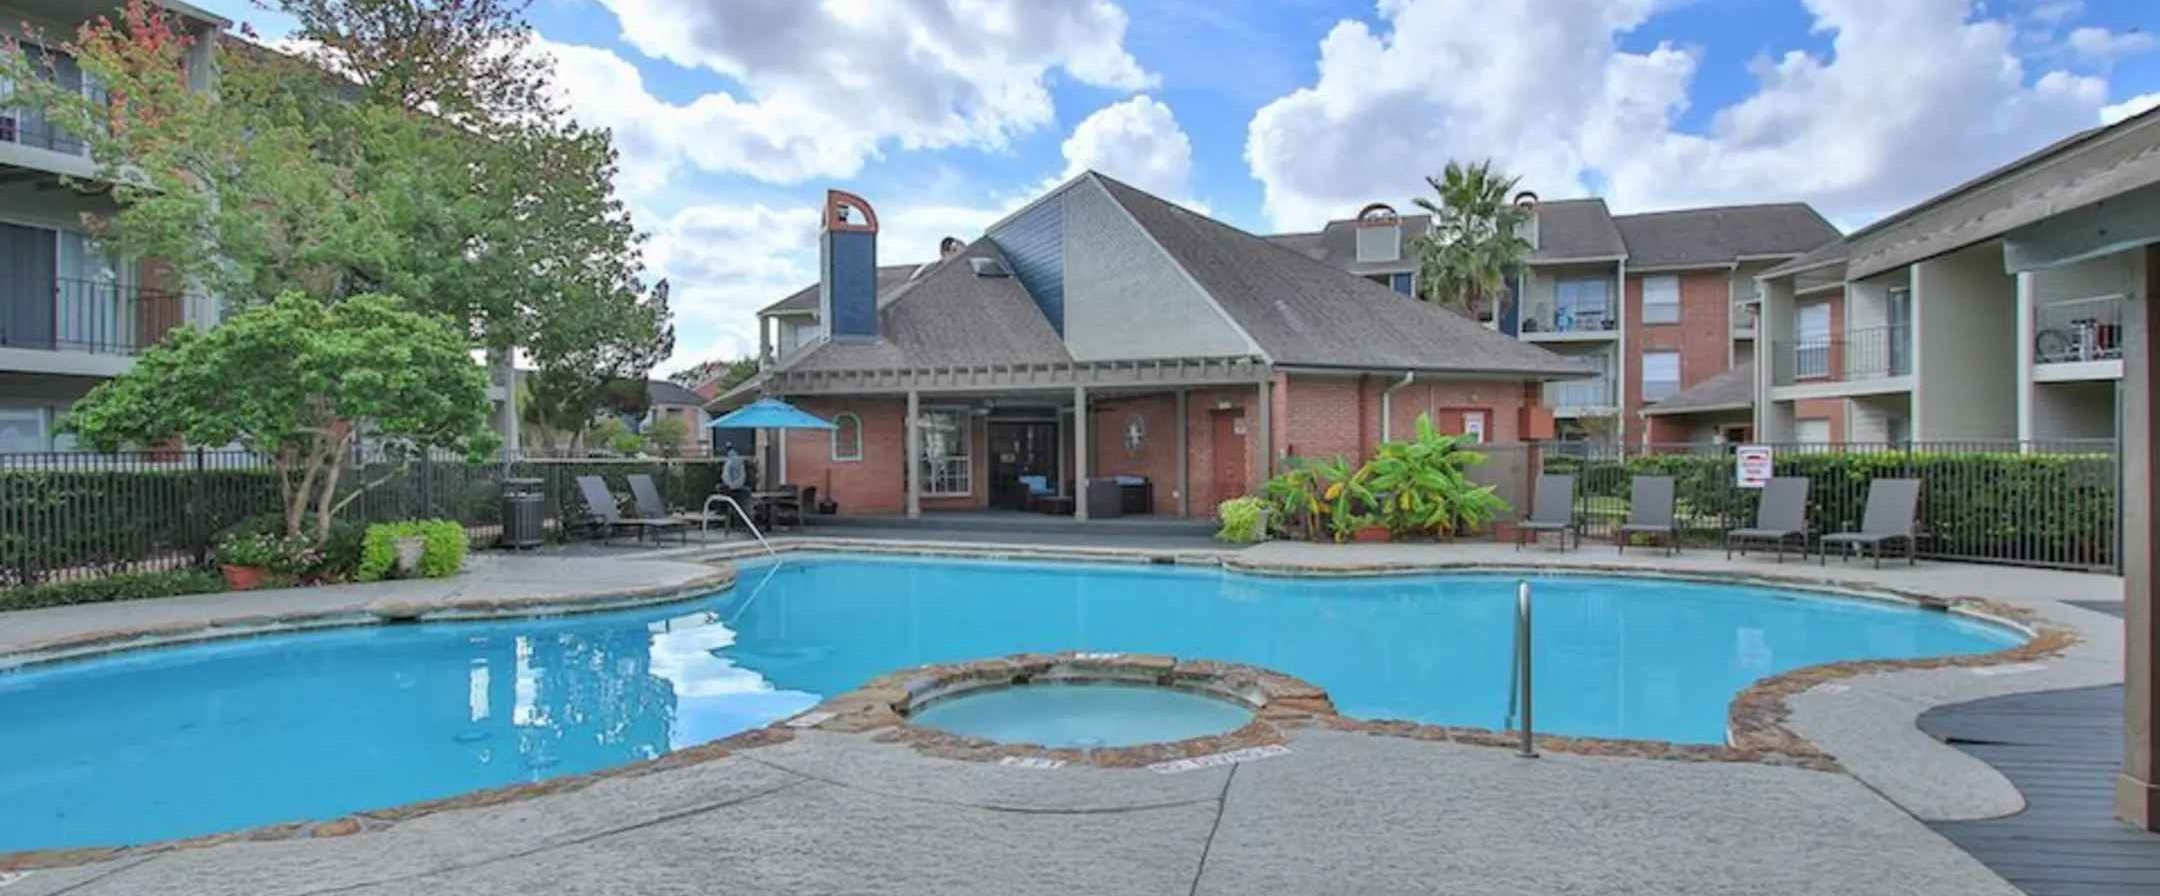 Resort-style Swimming Pool in Houston